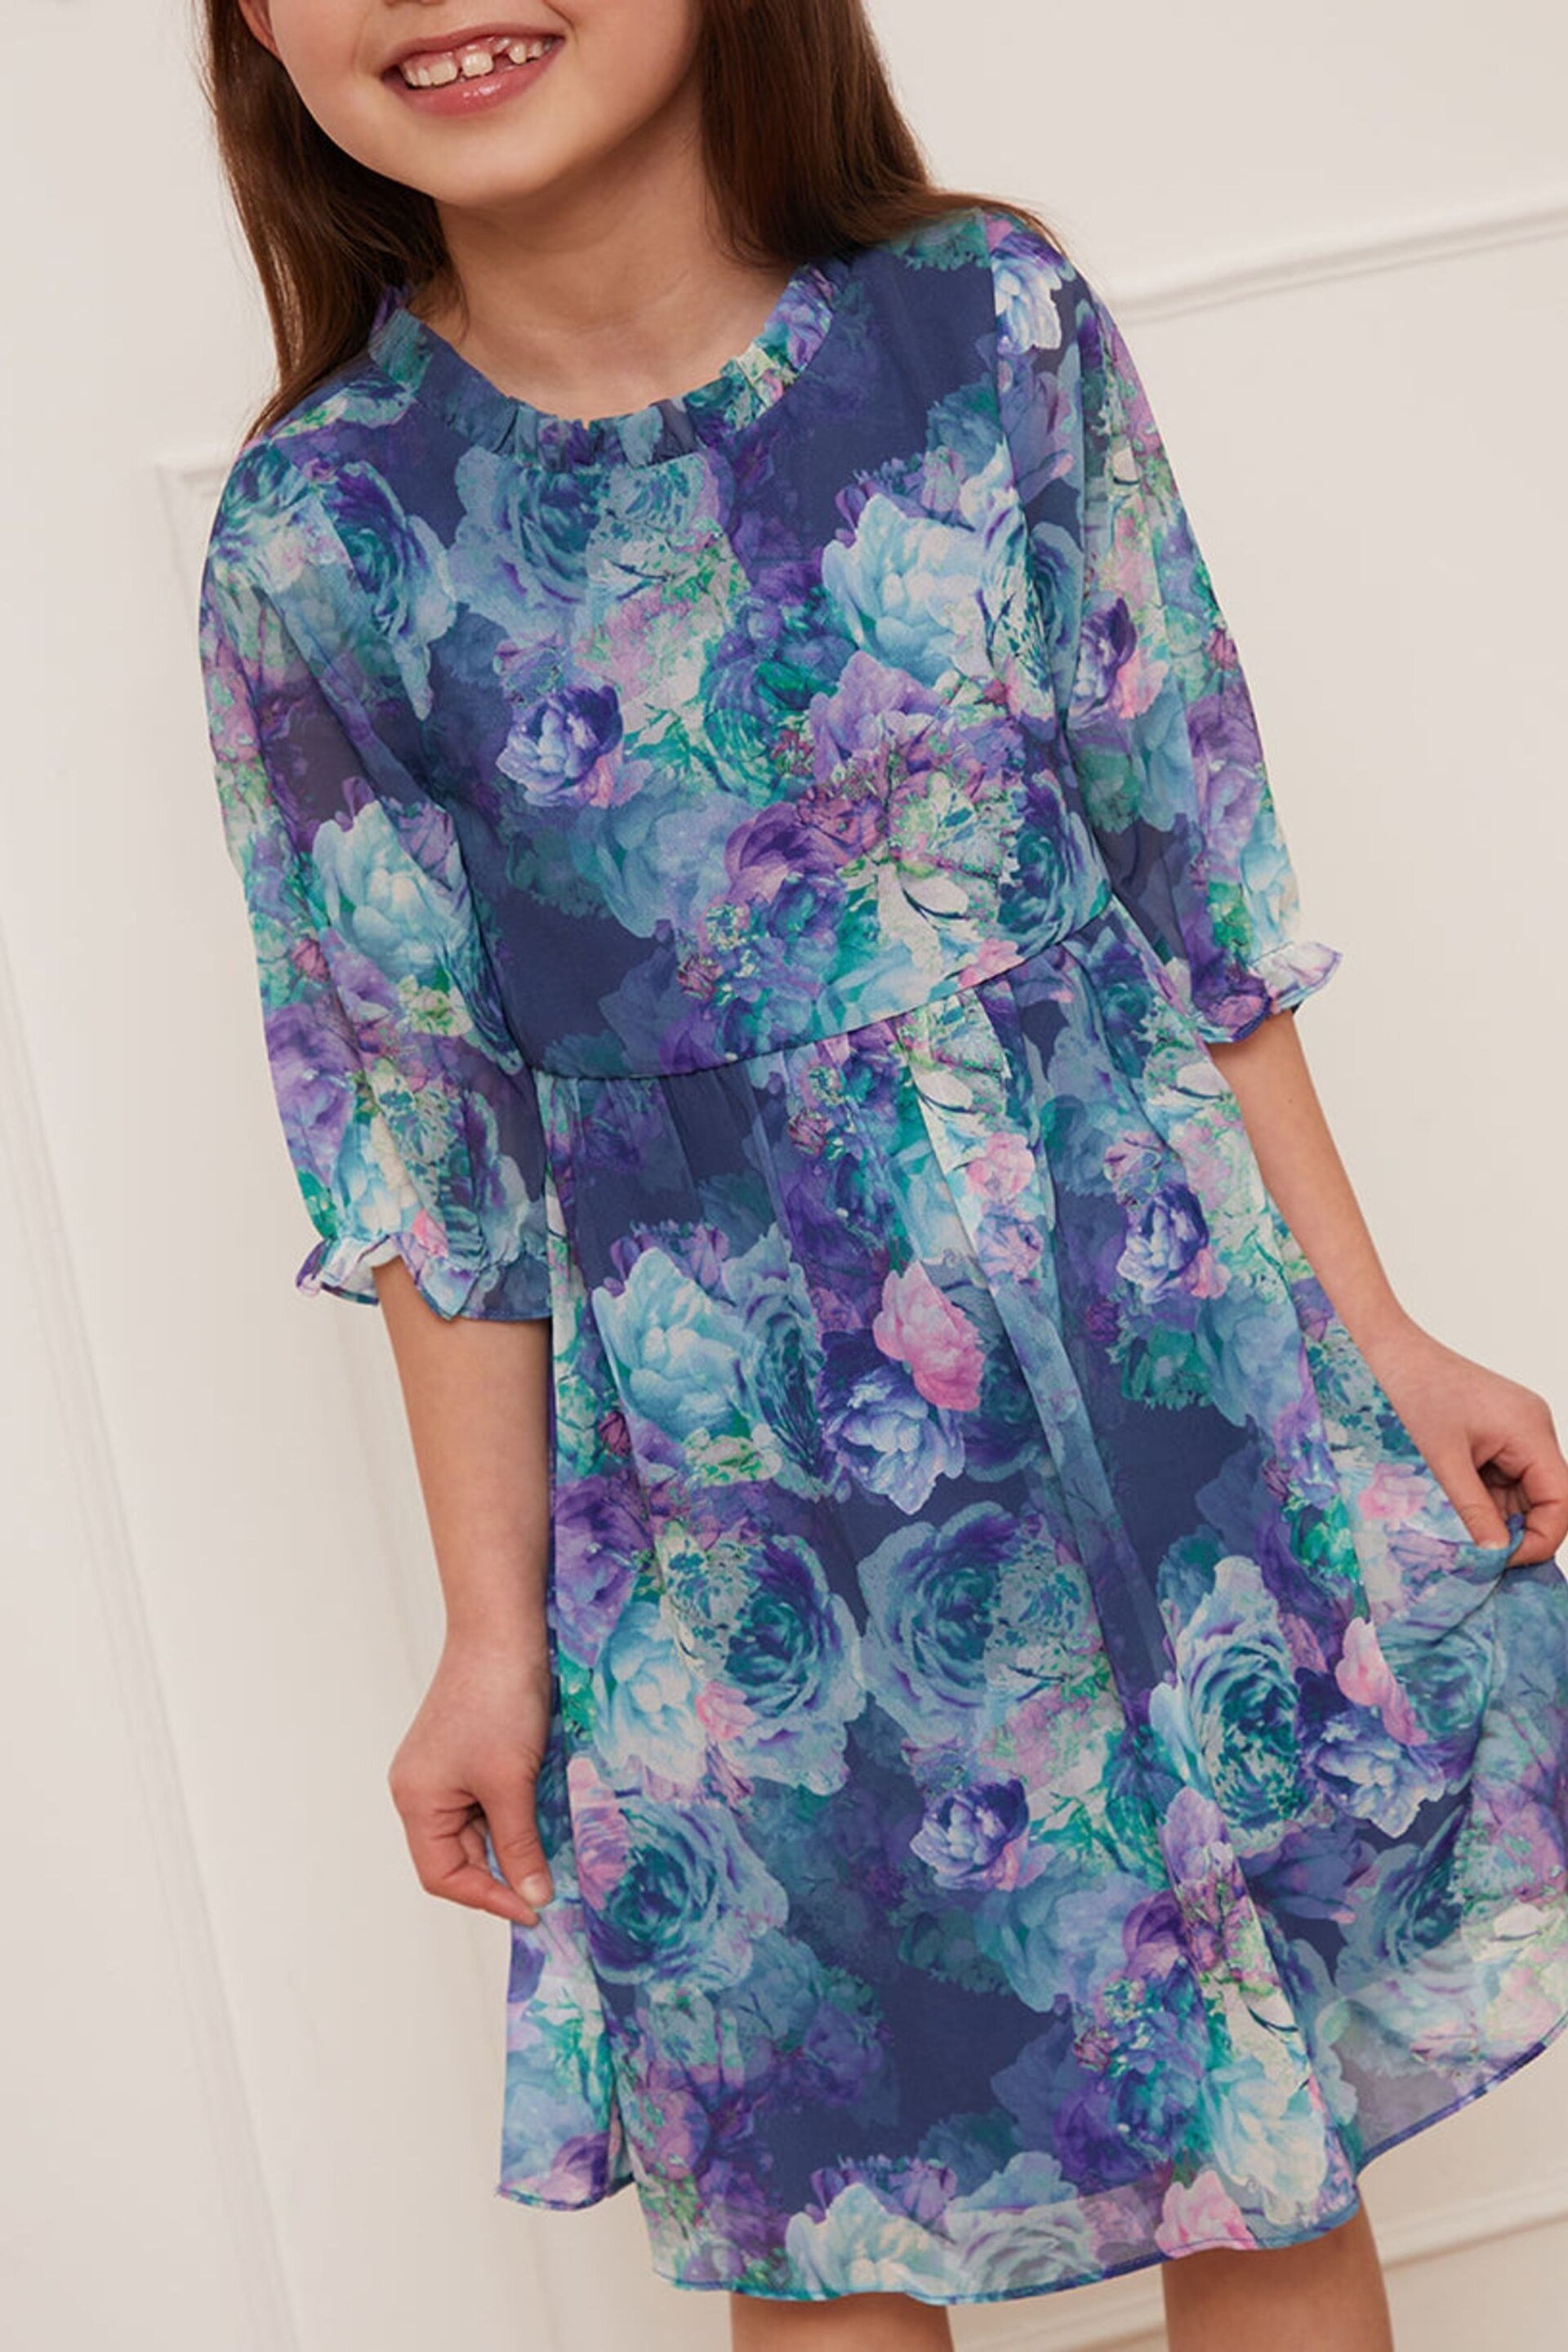 Chi Chi London Blue Girls Floral Print Dress - Image 5 of 5